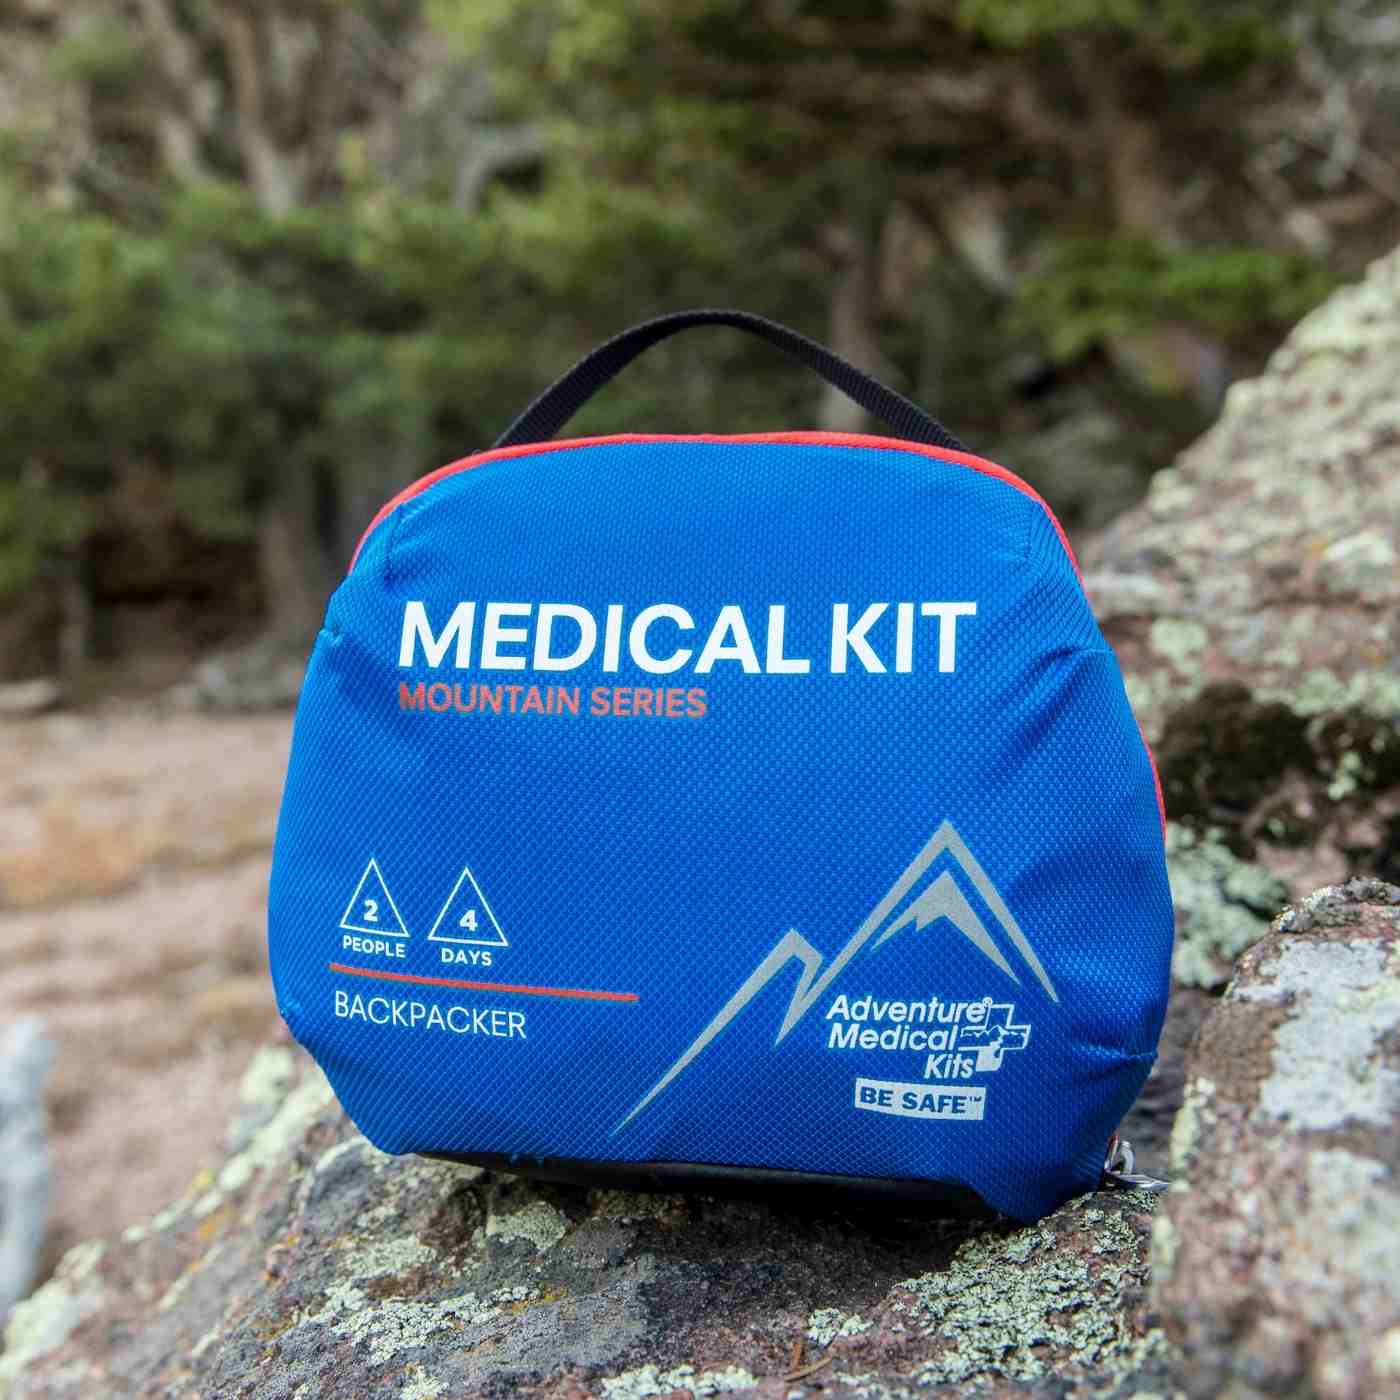 Mountain Series Medical Kit - Backpacker kit on rock